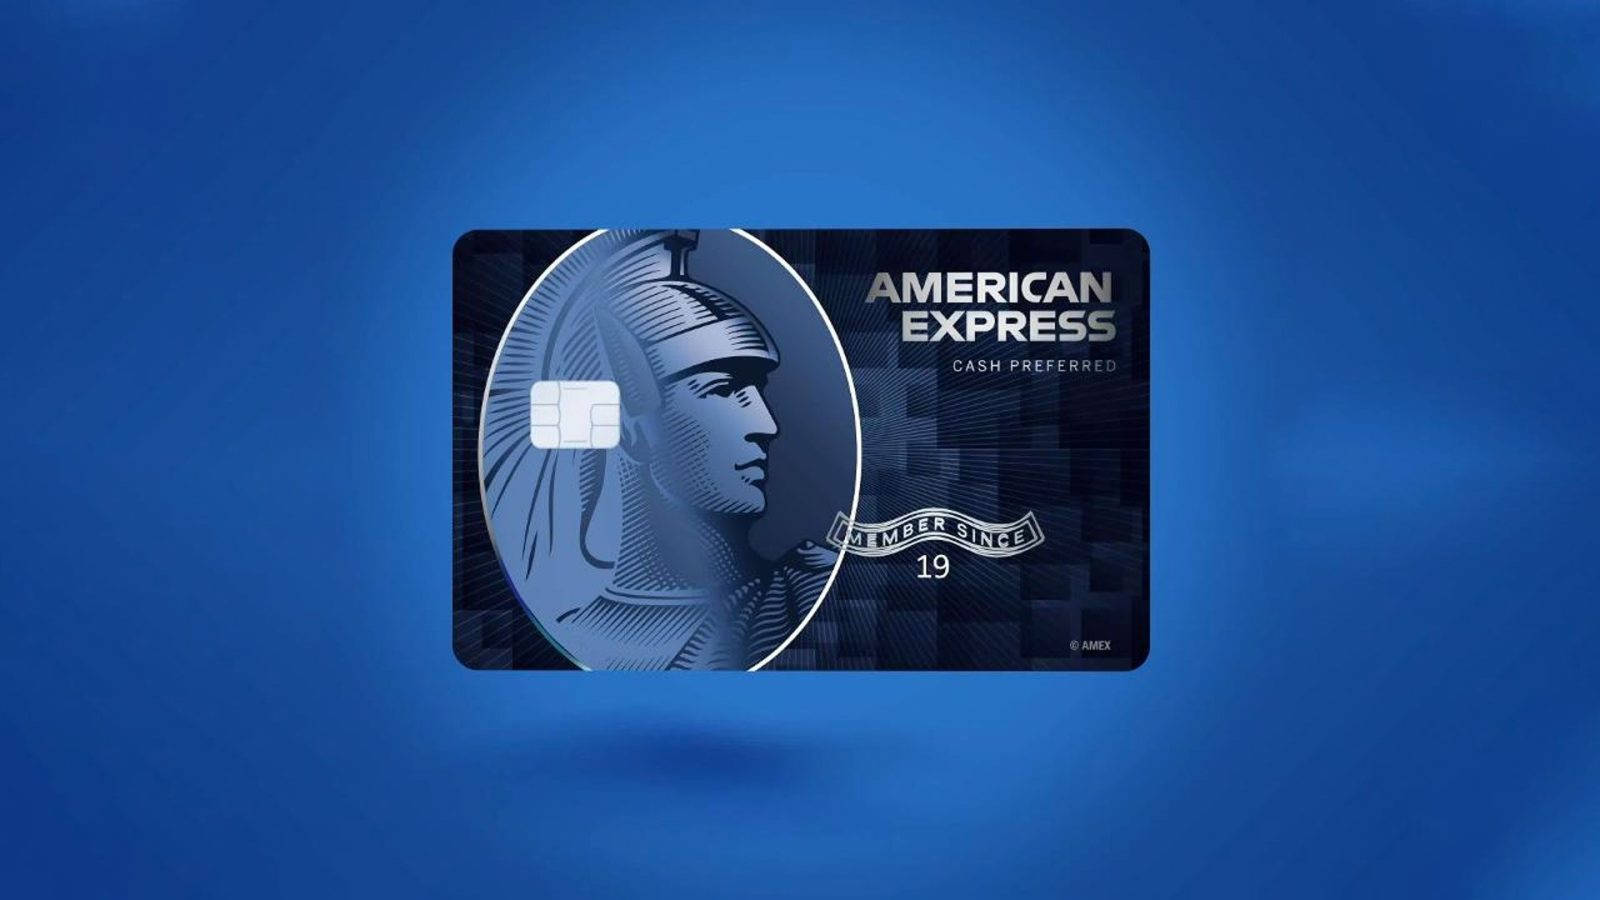 American Express Cash Preferred Card Background